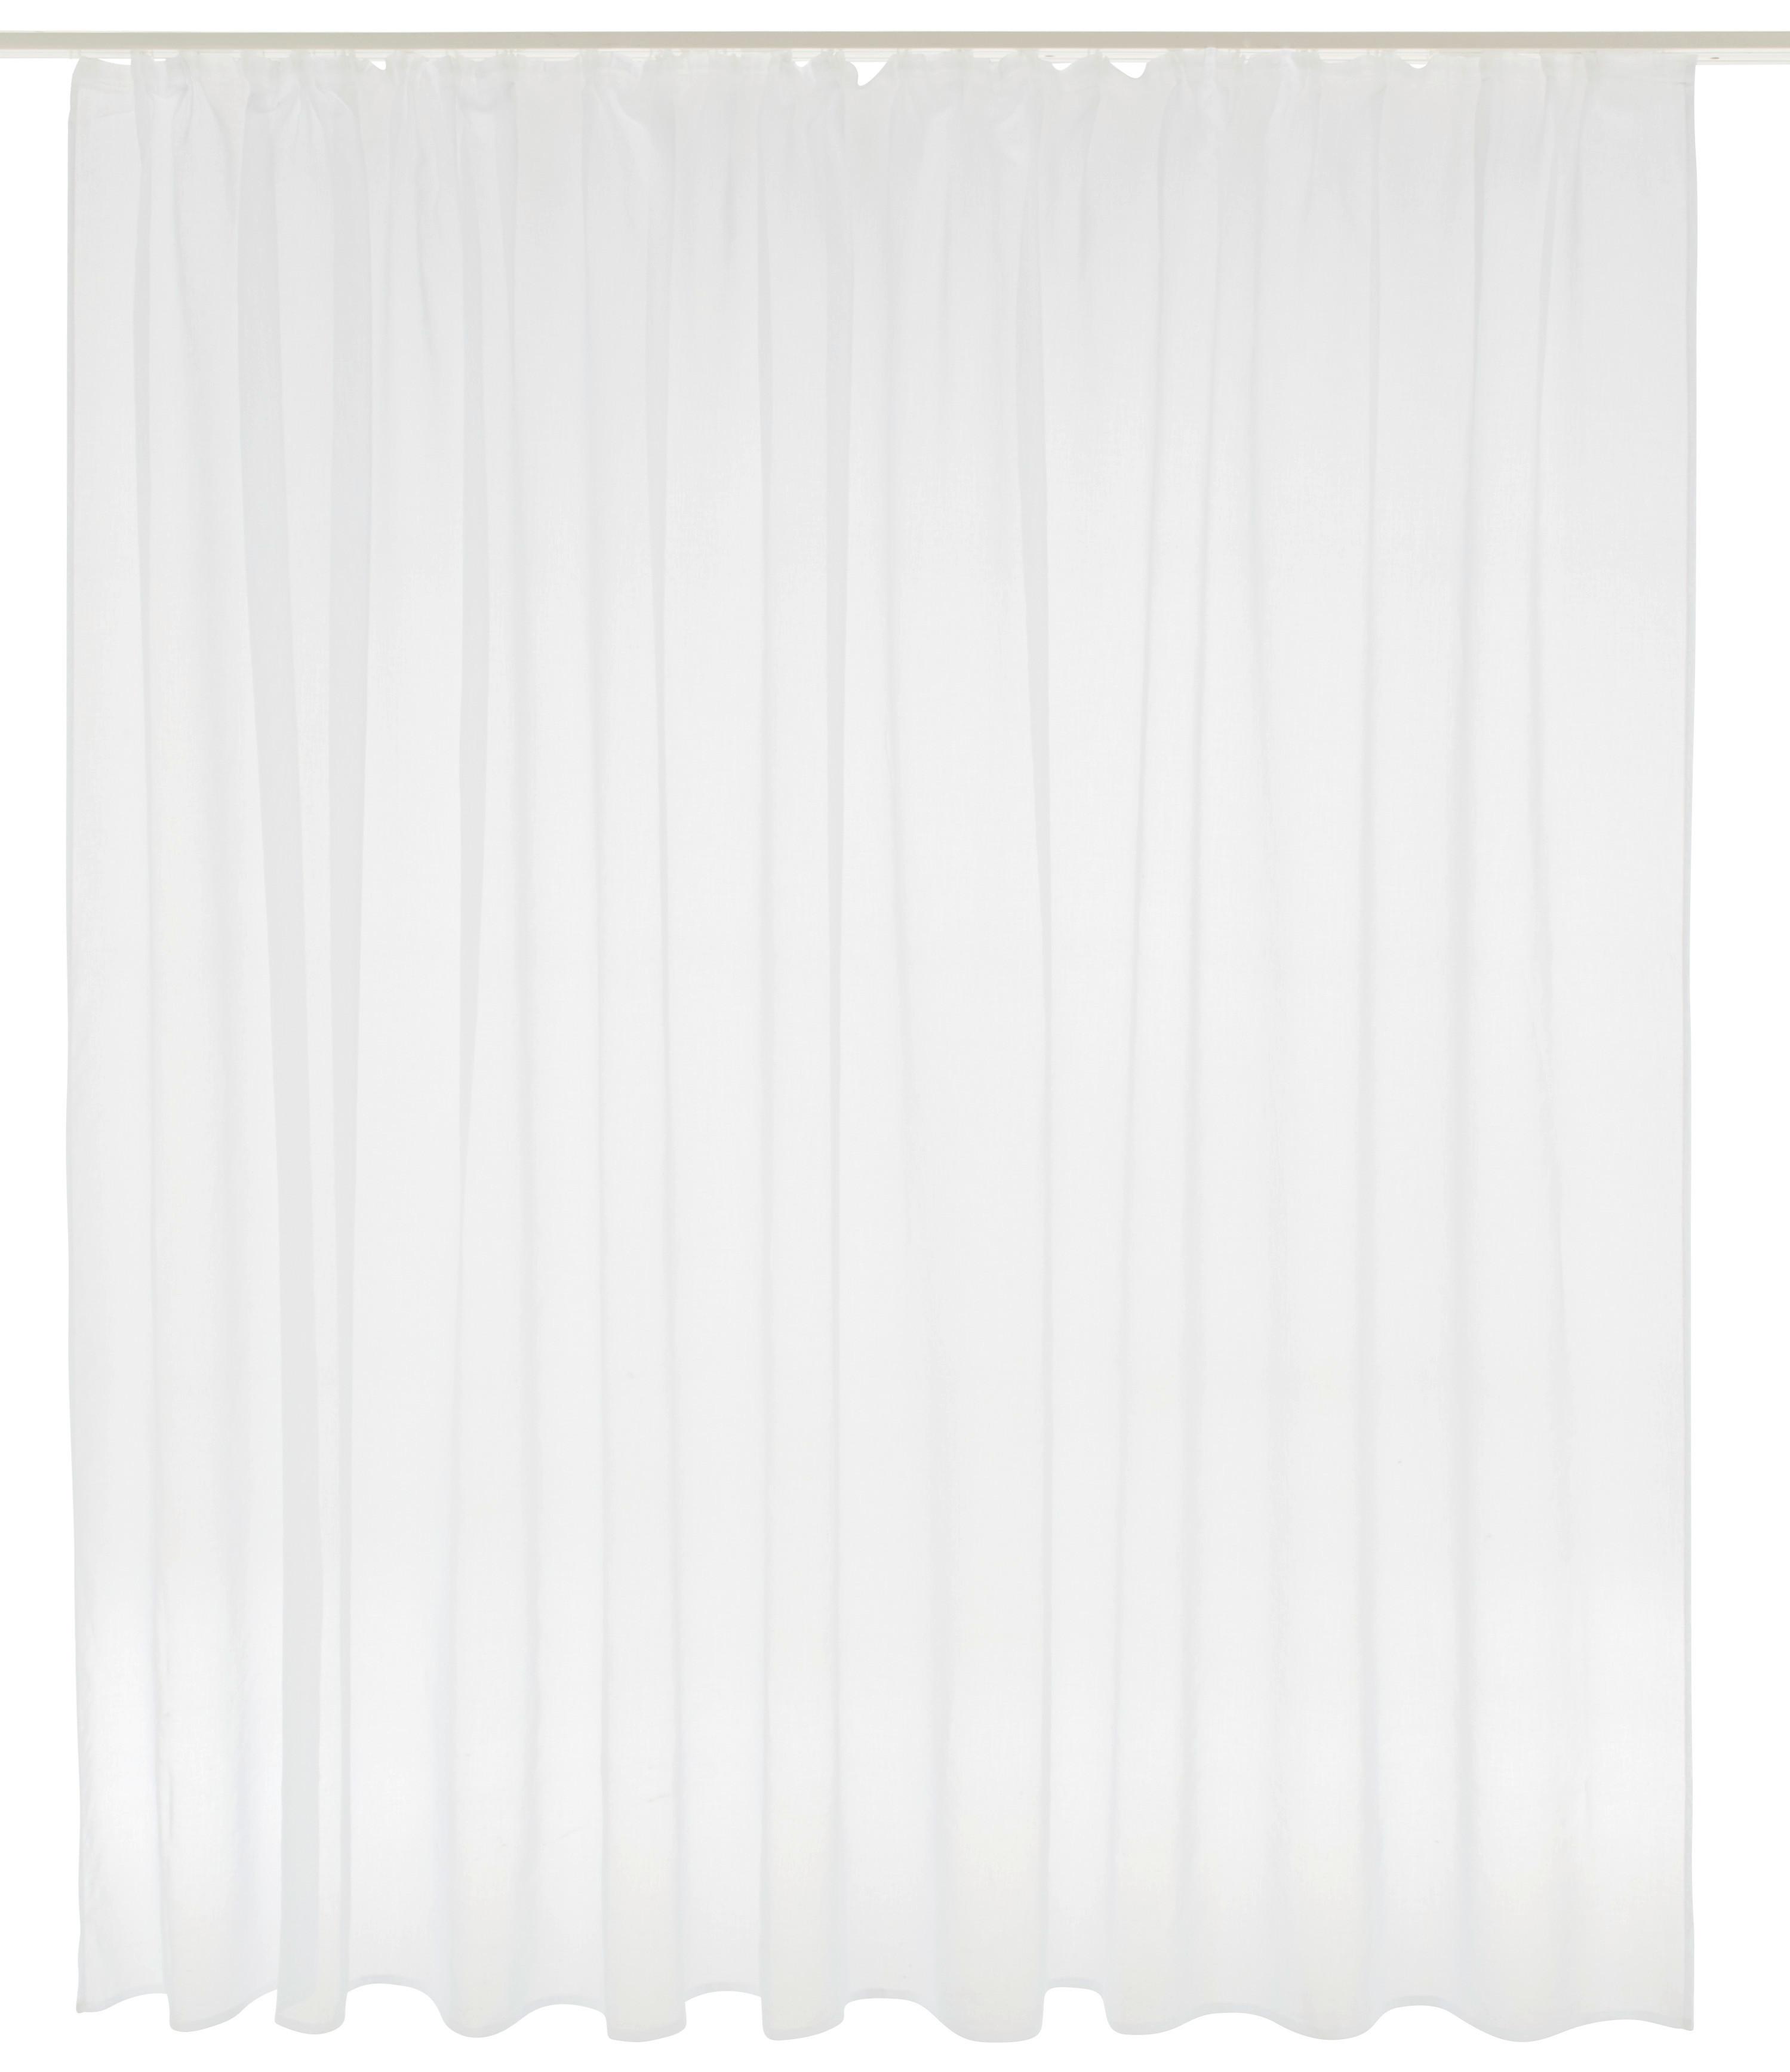 Fertigstore Tosca Store 2 ca. 300x175cm - Weiß, Textil (300/175cm) - Modern Living